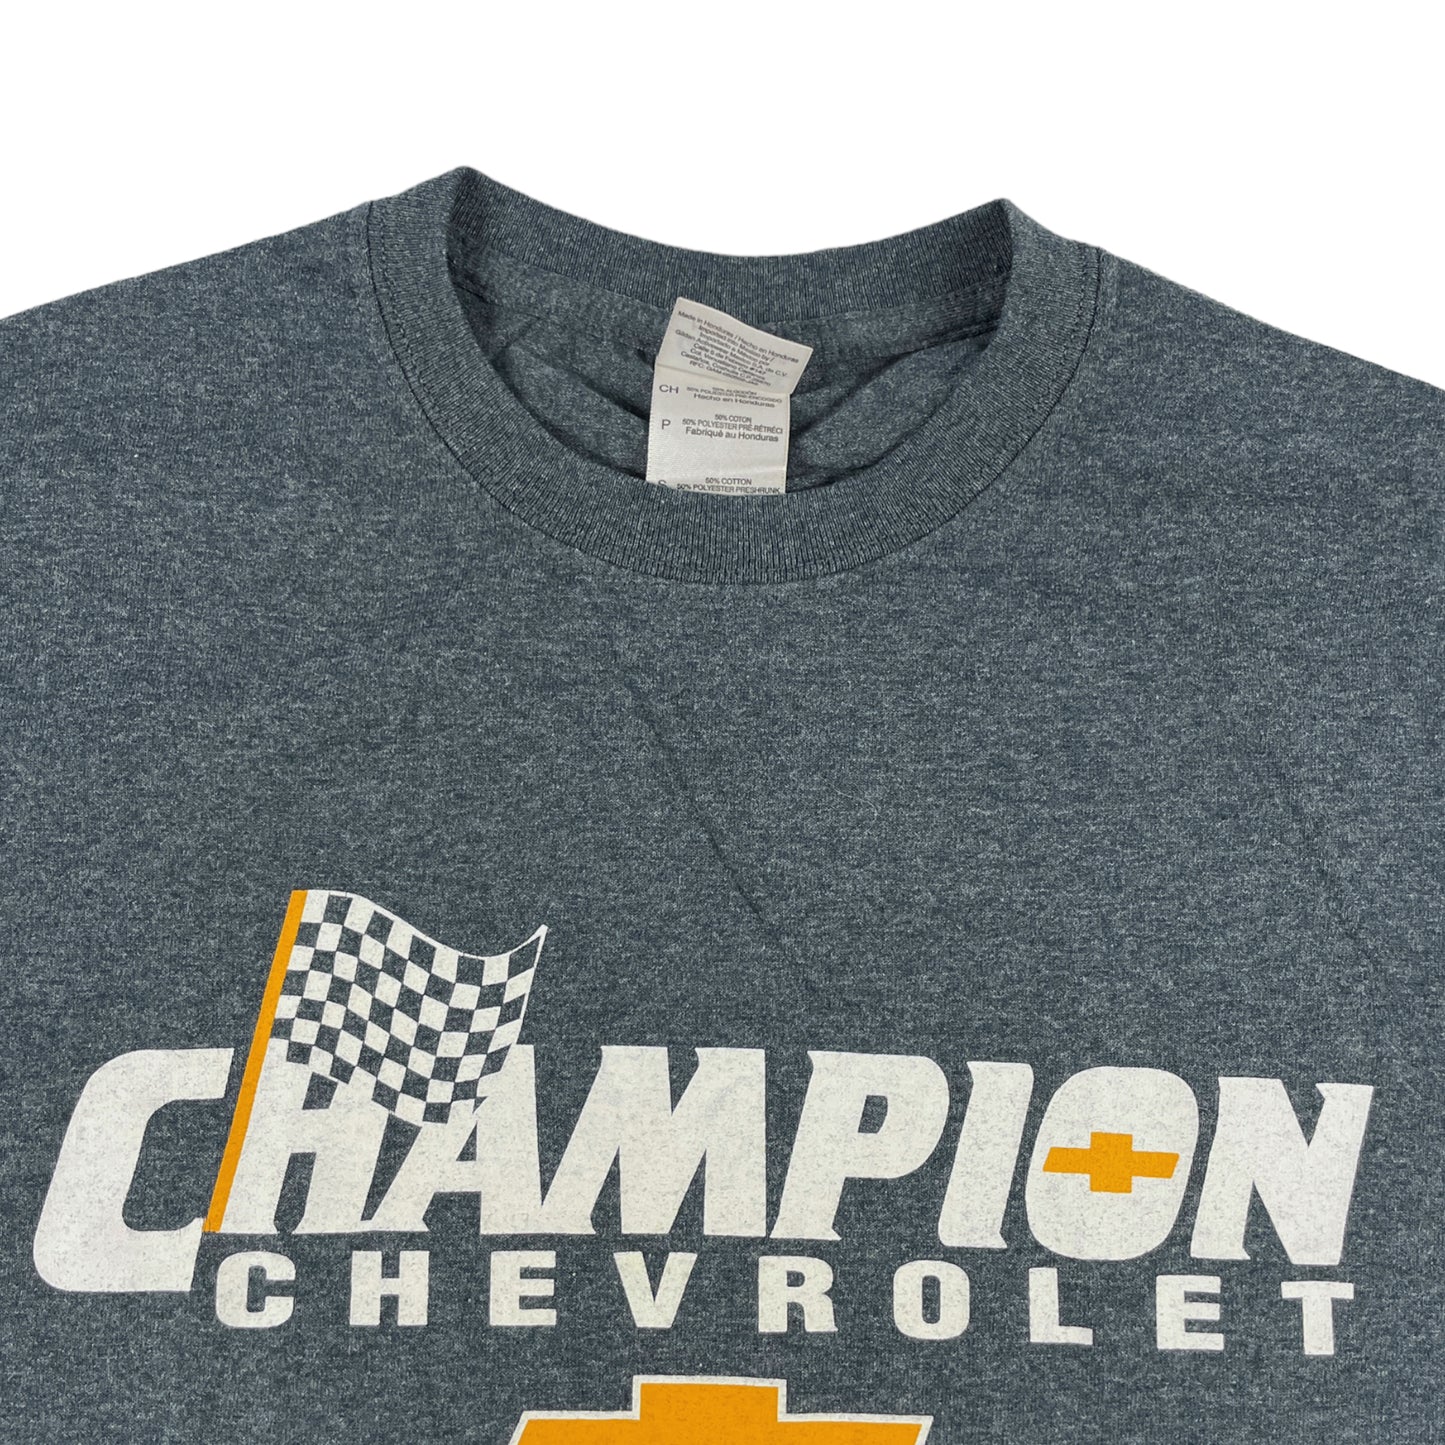 Champion Chevrolet T-Shirt